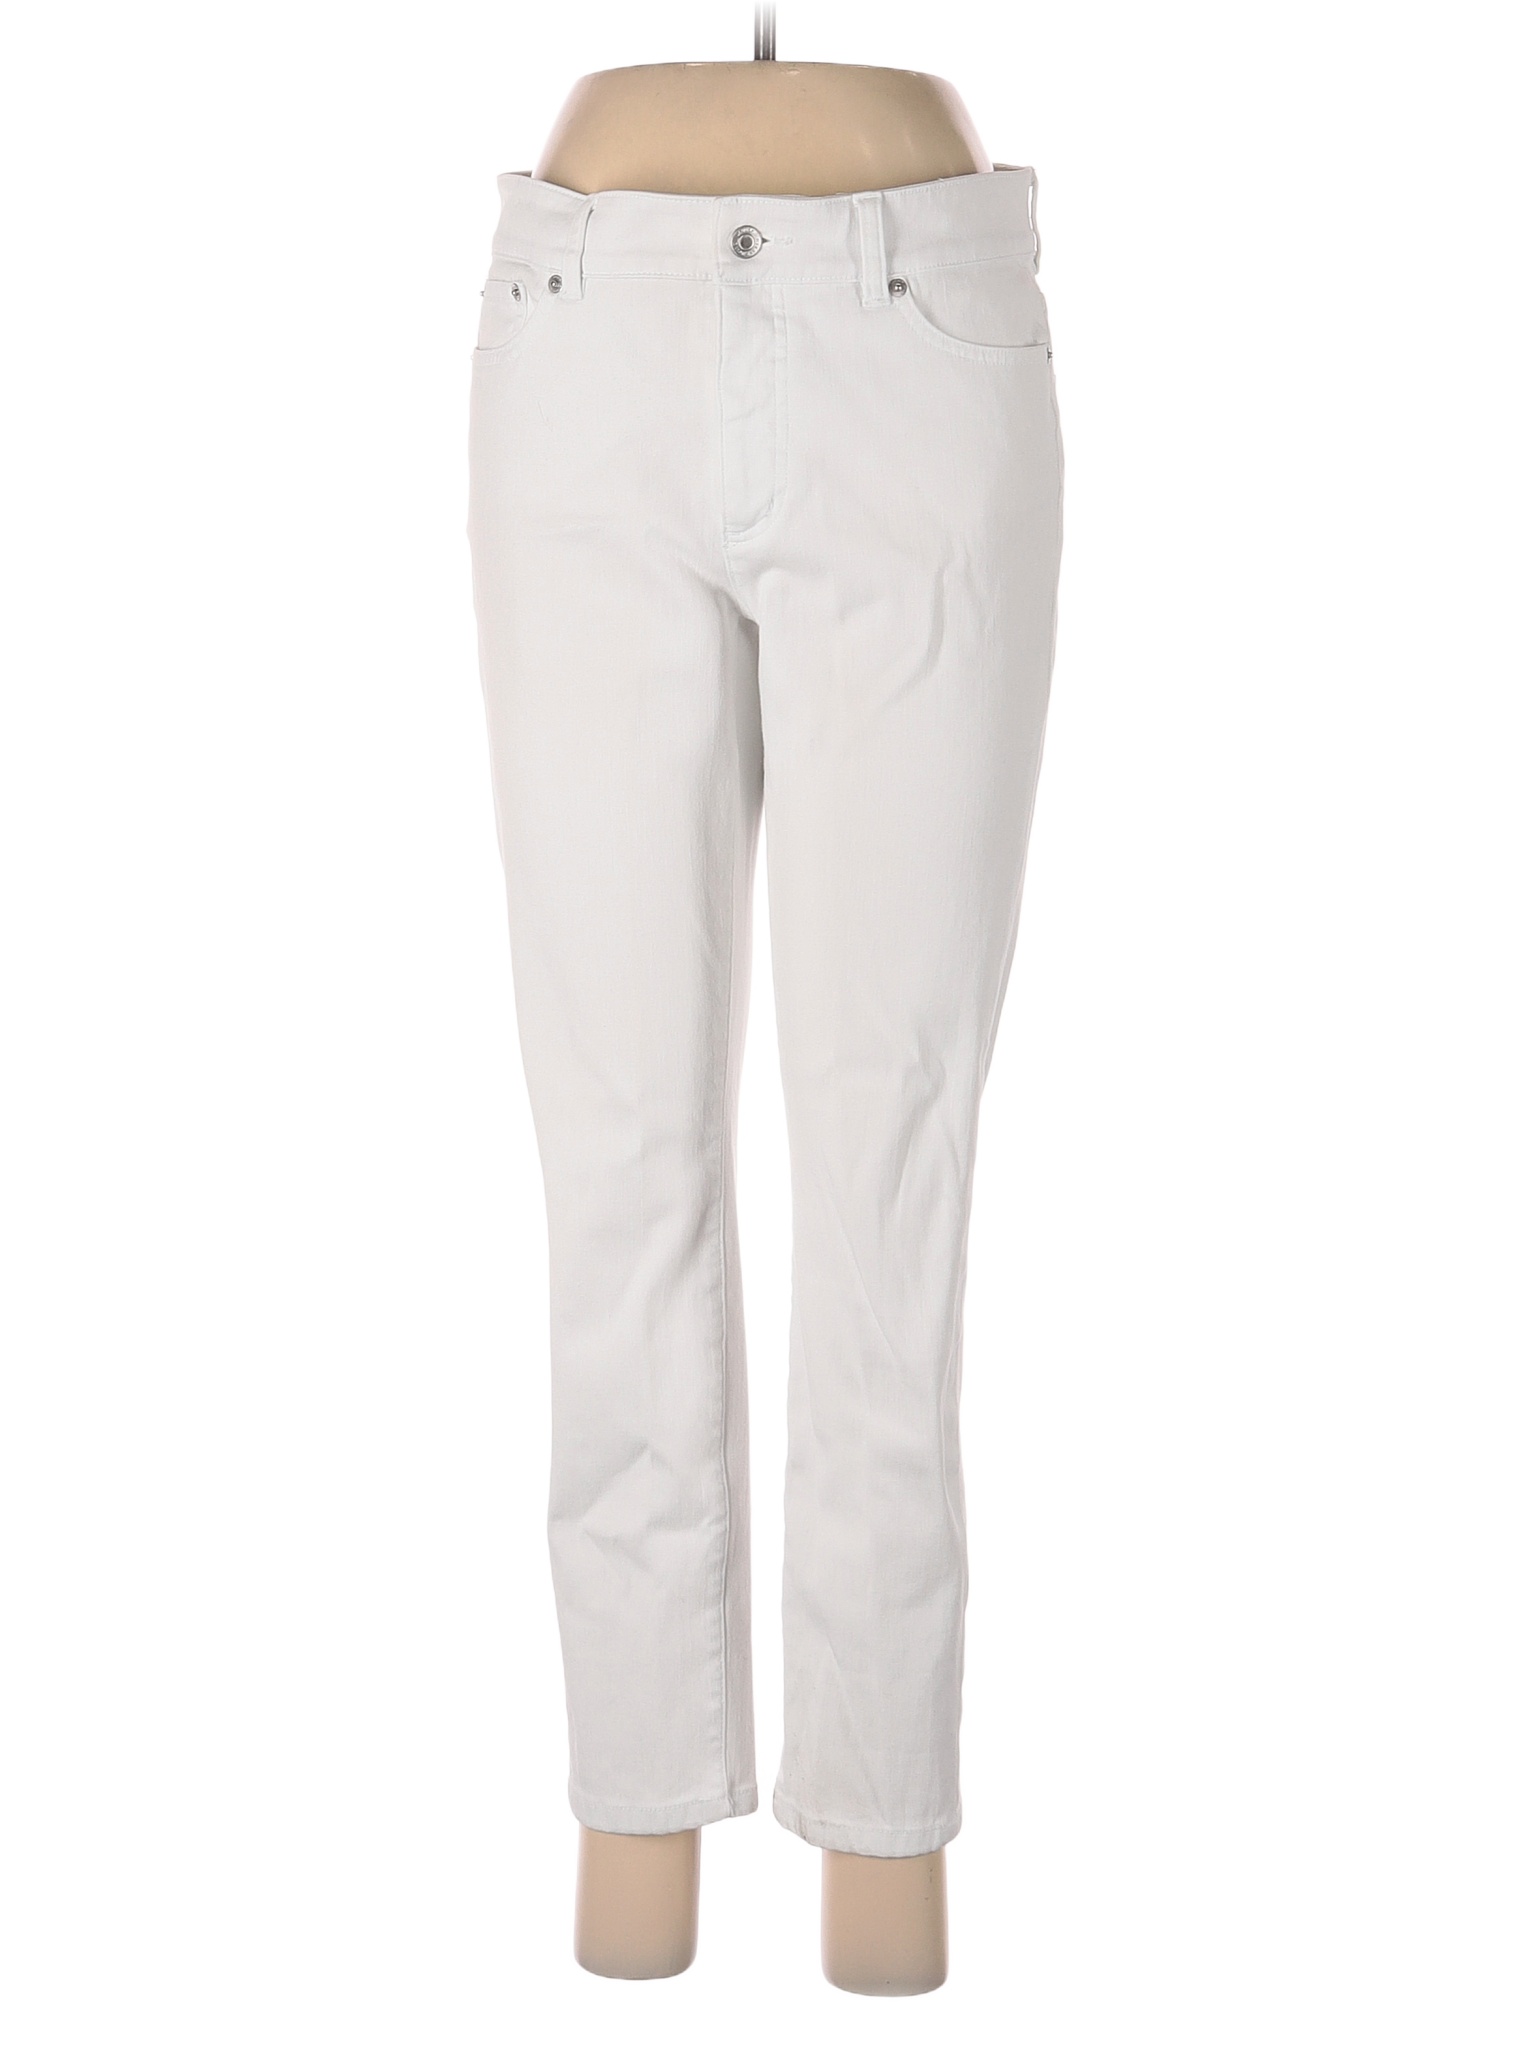 Lauren by Ralph Lauren 100% Cotton Solid White Jeans Size 8 - 67% off ...